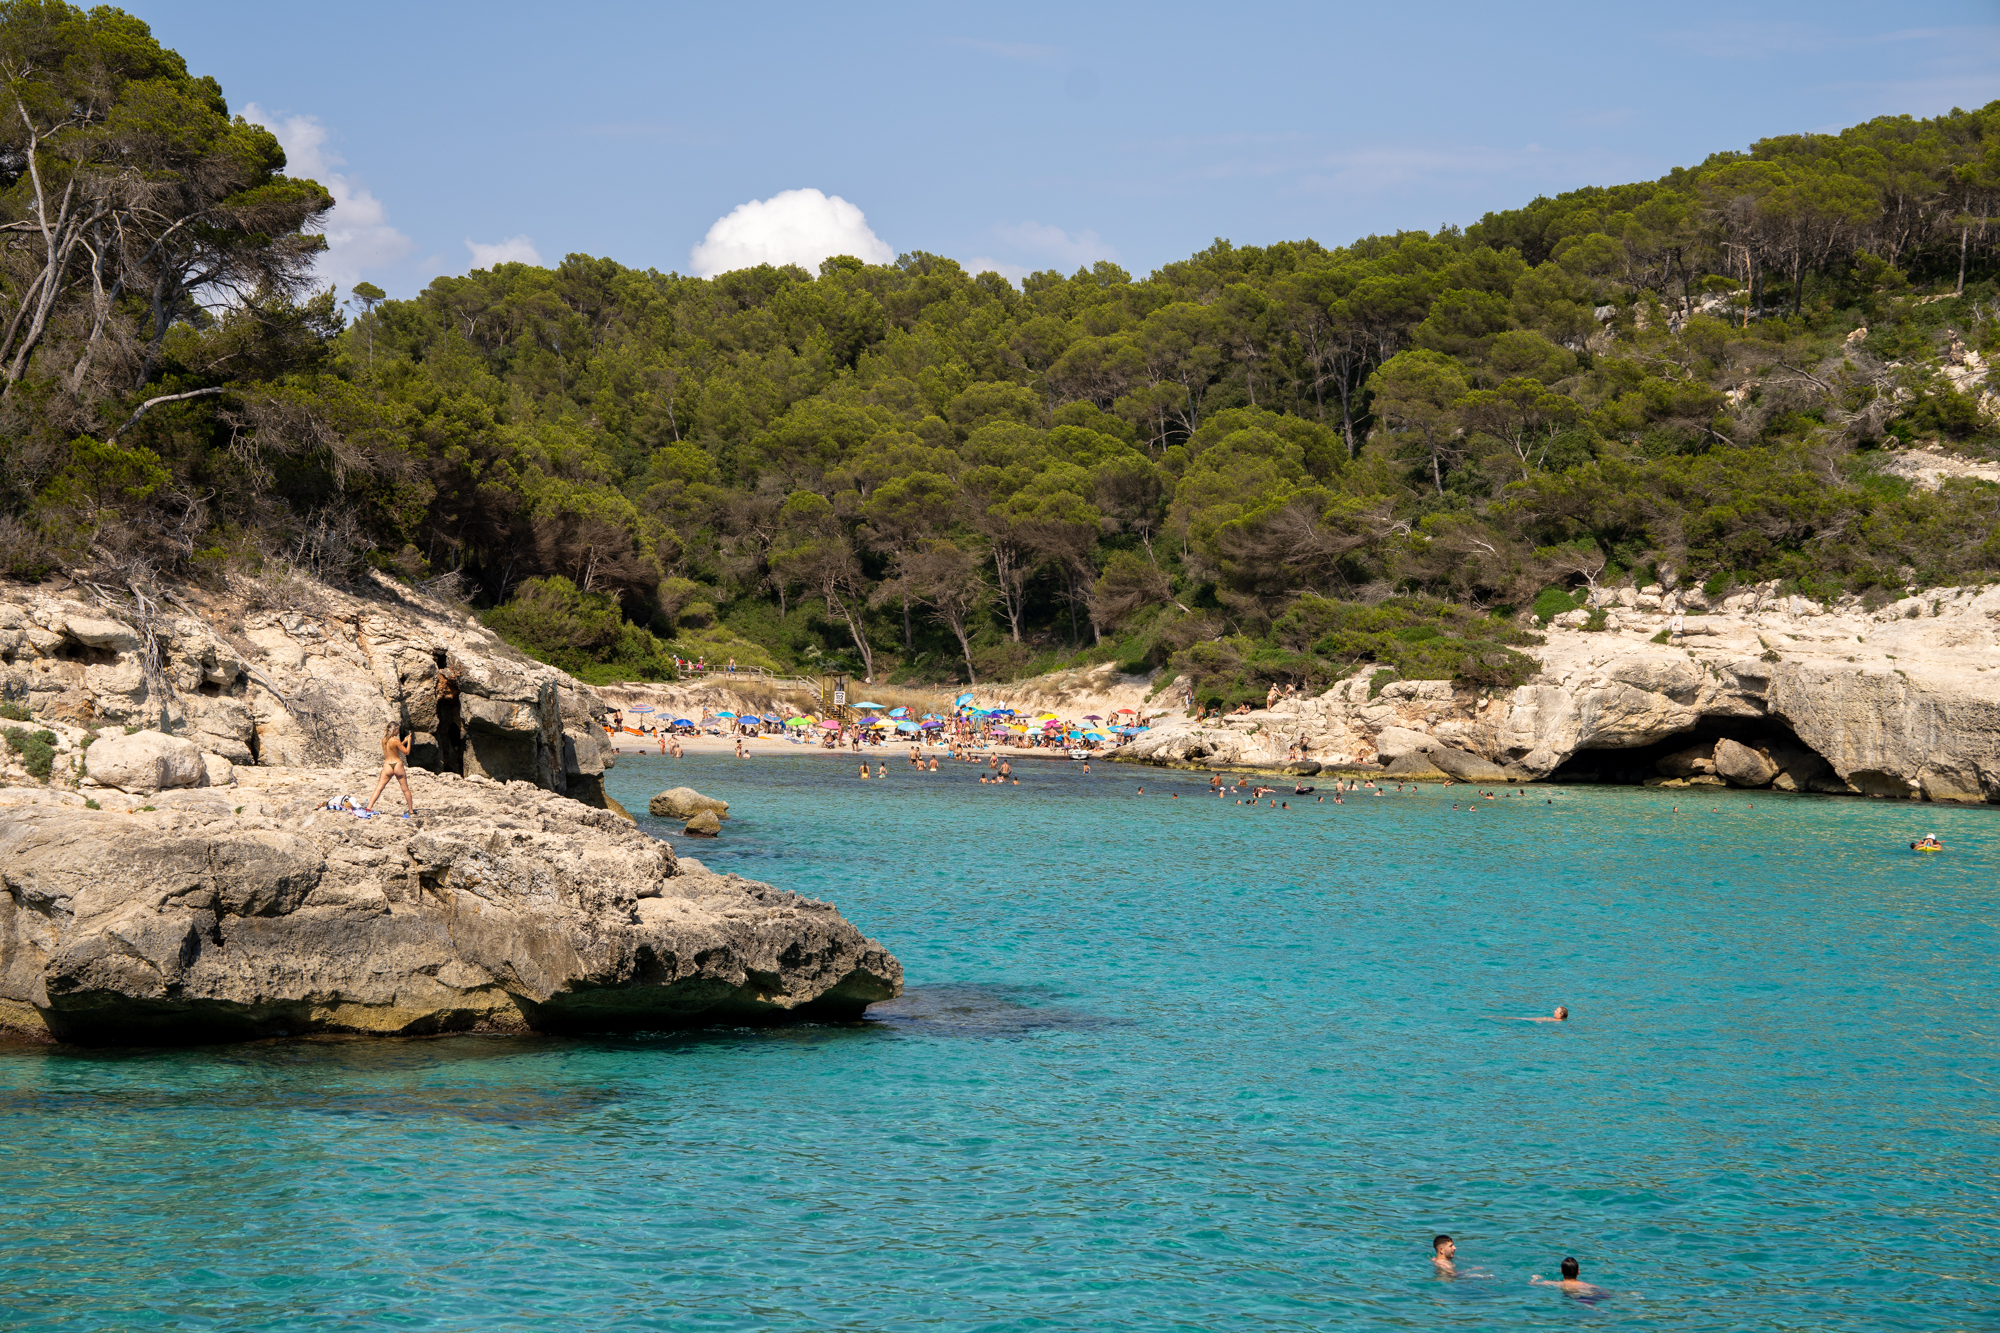 How to Visit Cala Mitjana & Cala Mitjaneta in Menorca